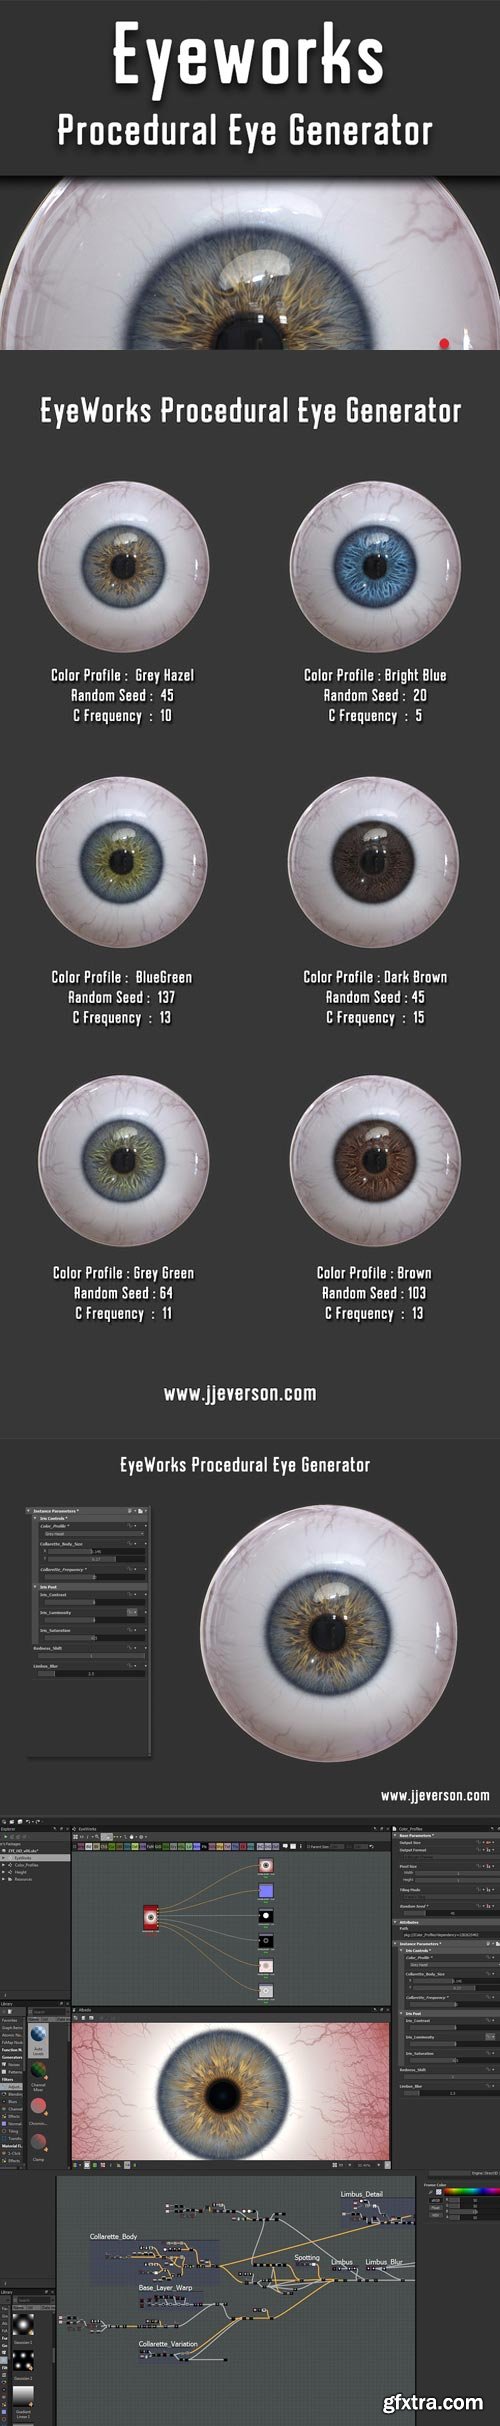 CB - EyeWorks Procedural Eye Generator